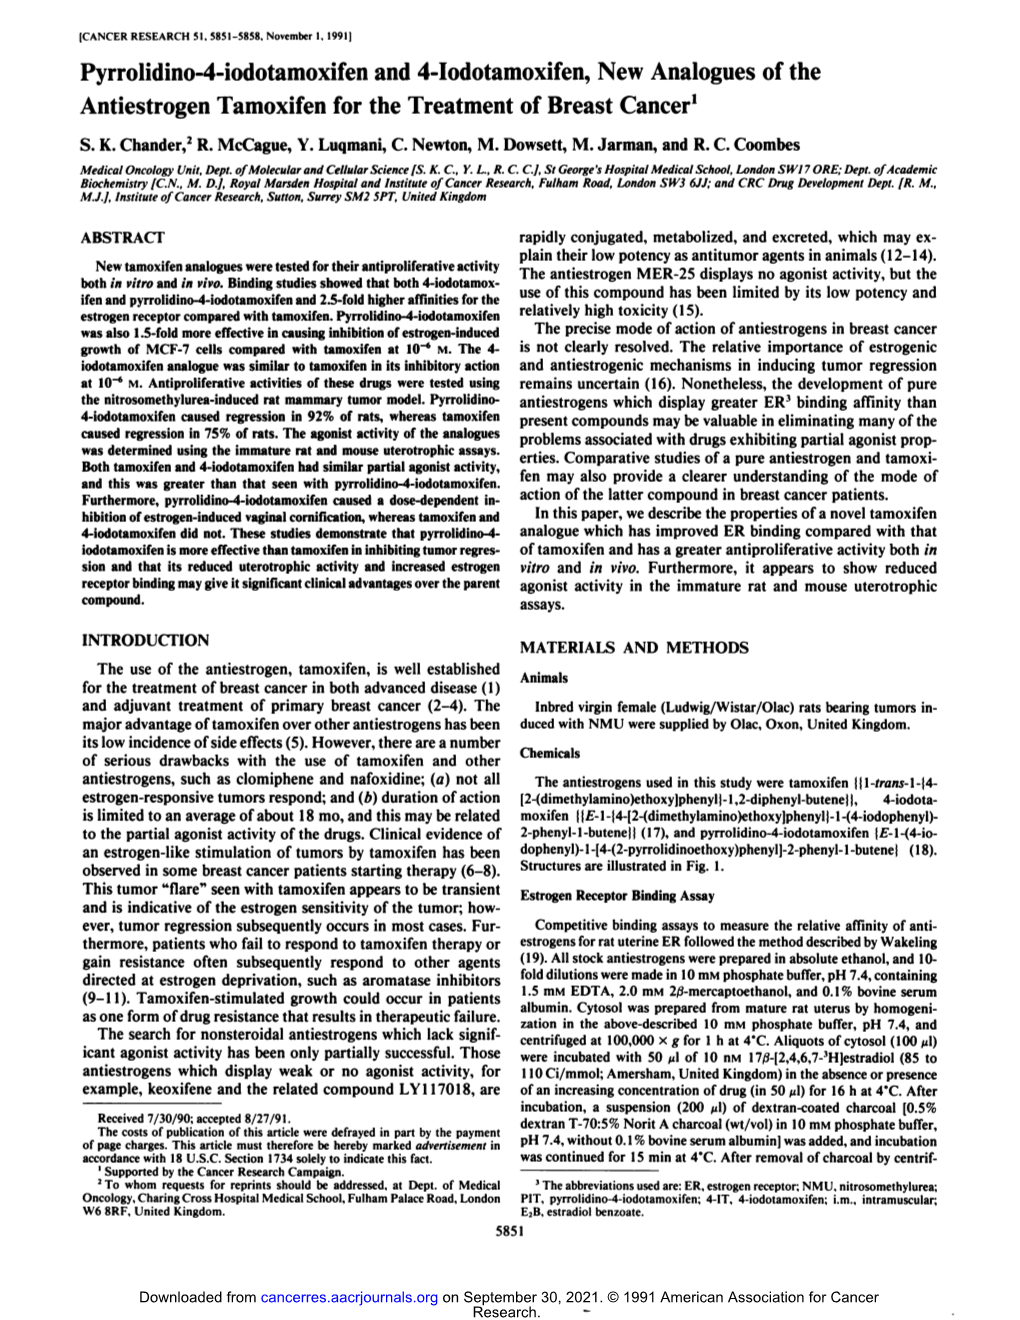 Pyrrolidino-4-Iodotamoxifen and 4-Iodotamoxifen, New Analogues of the Antiestrogen Tamoxifen for the Treatment of Breast Cancer1